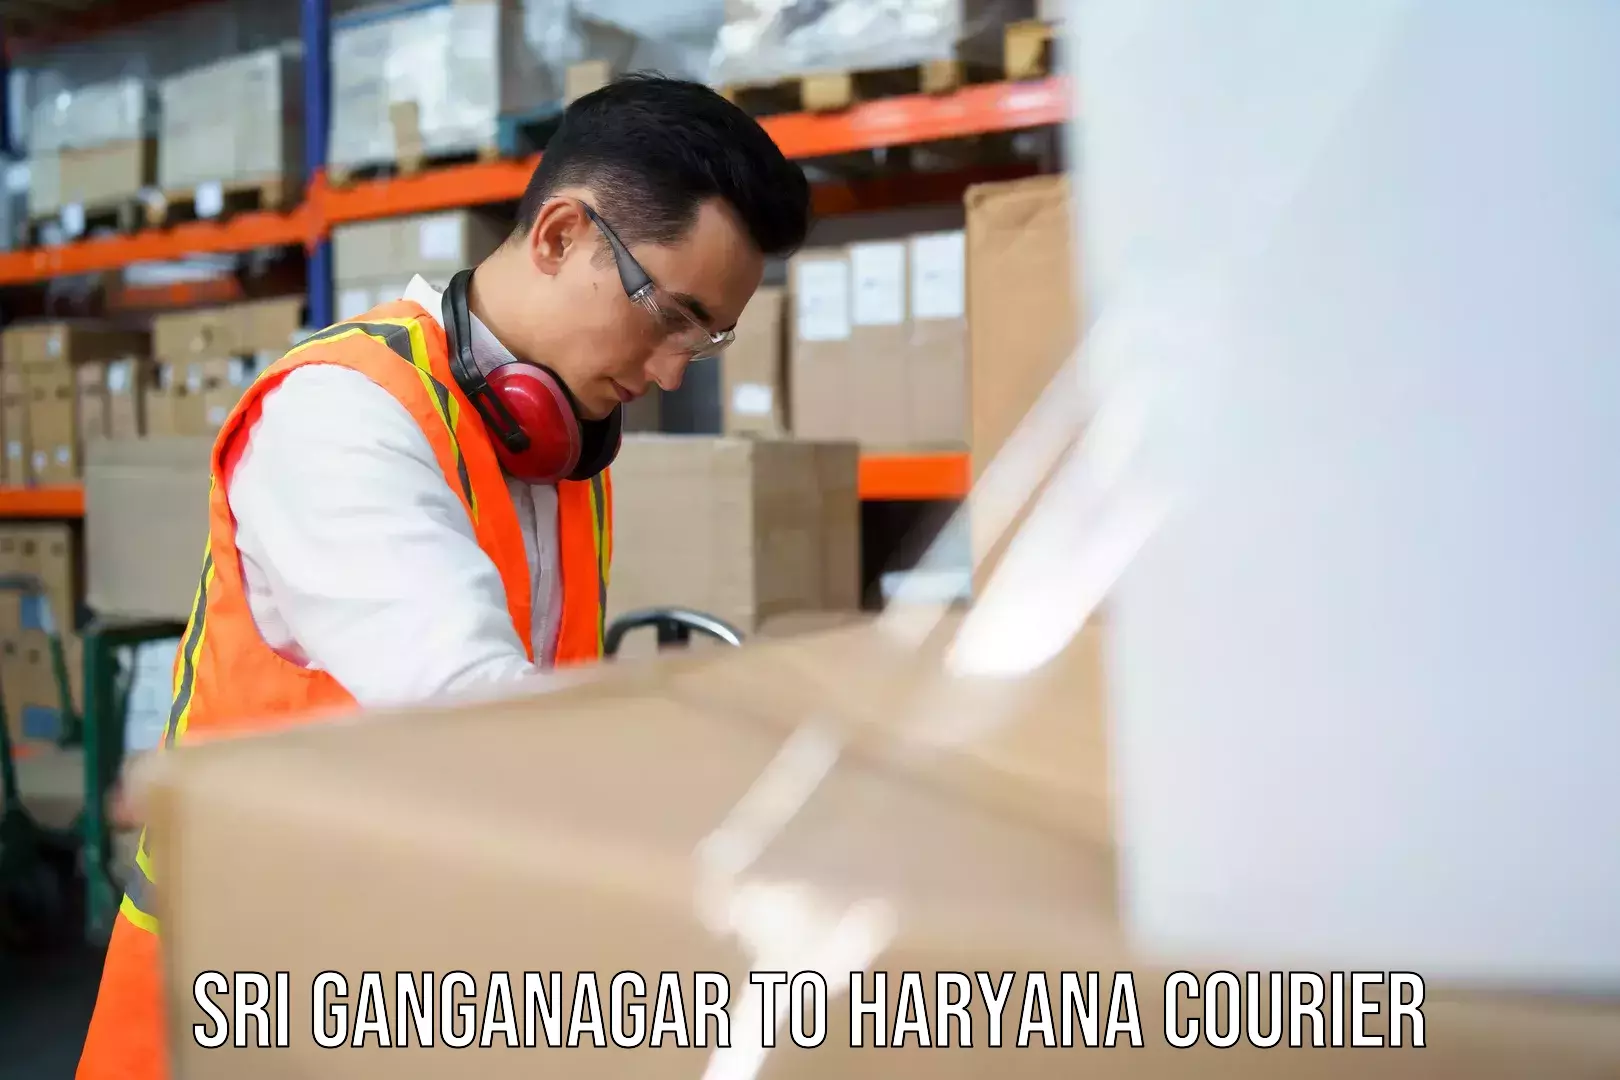 Courier services Sri Ganganagar to Charkhari